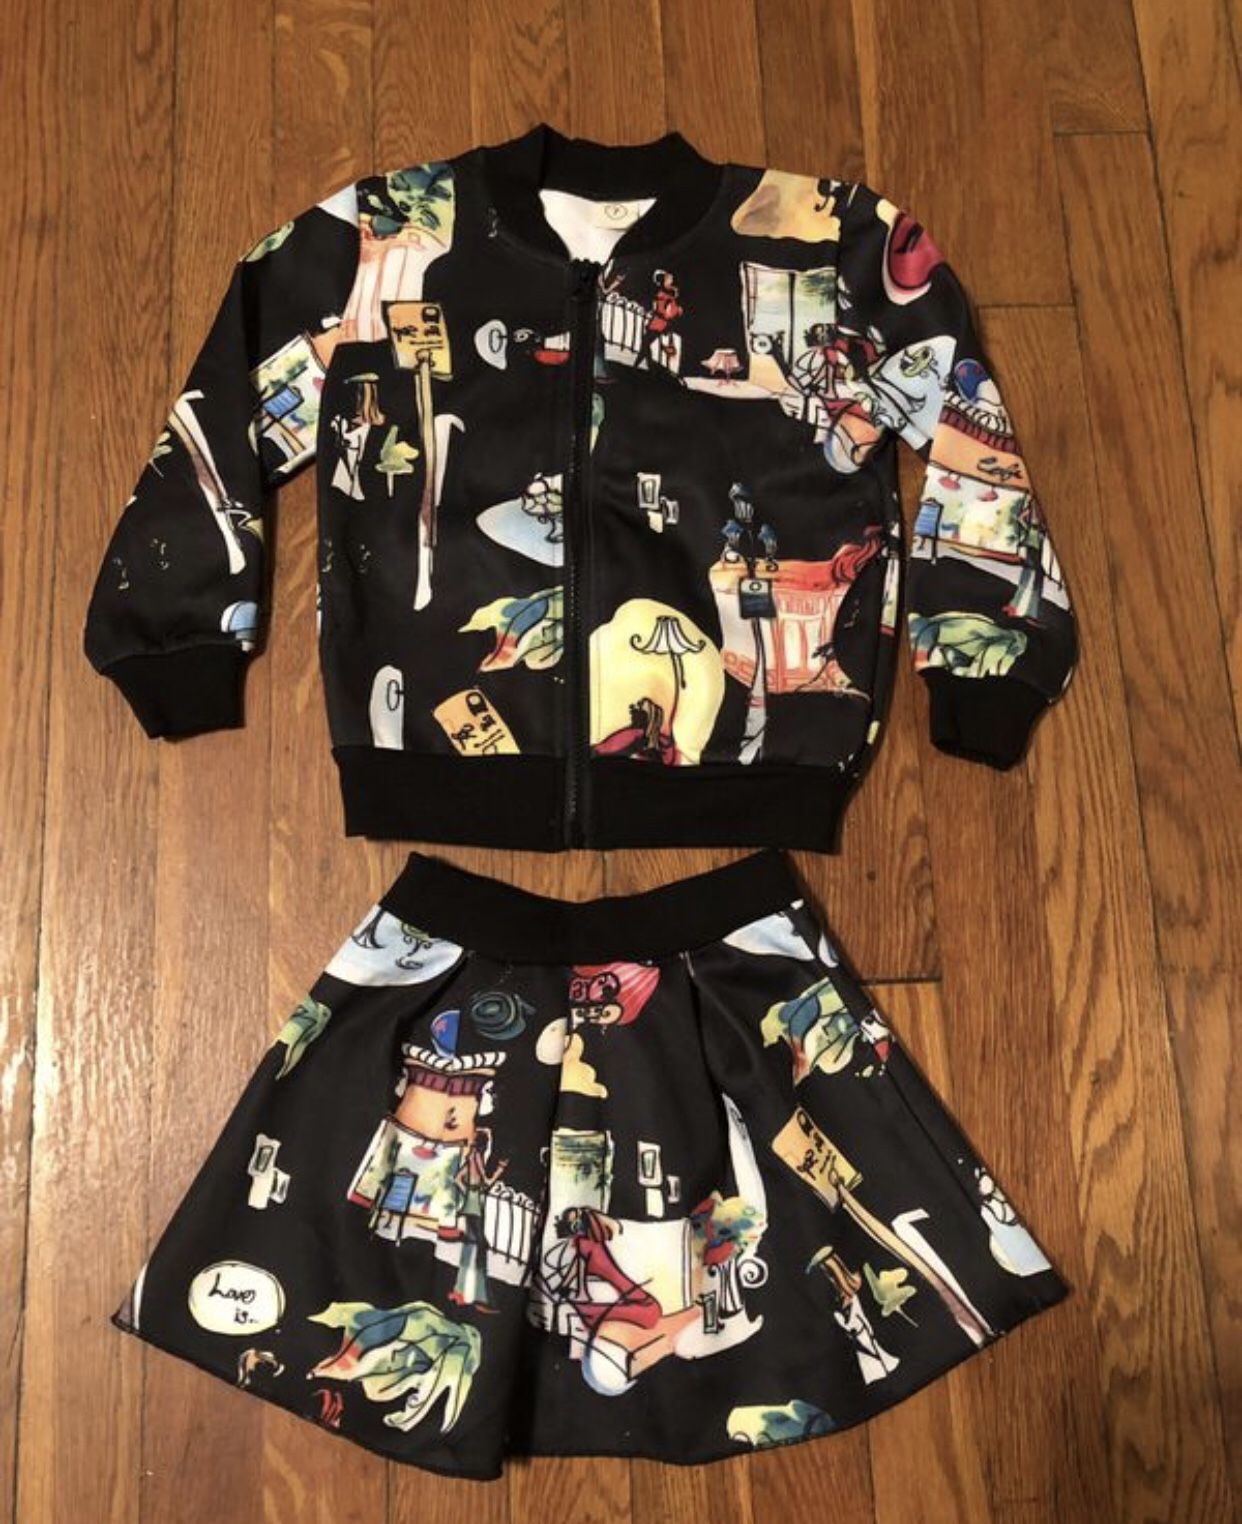 New! Kids 2 piece jacket & skirt size 7 Paid $28